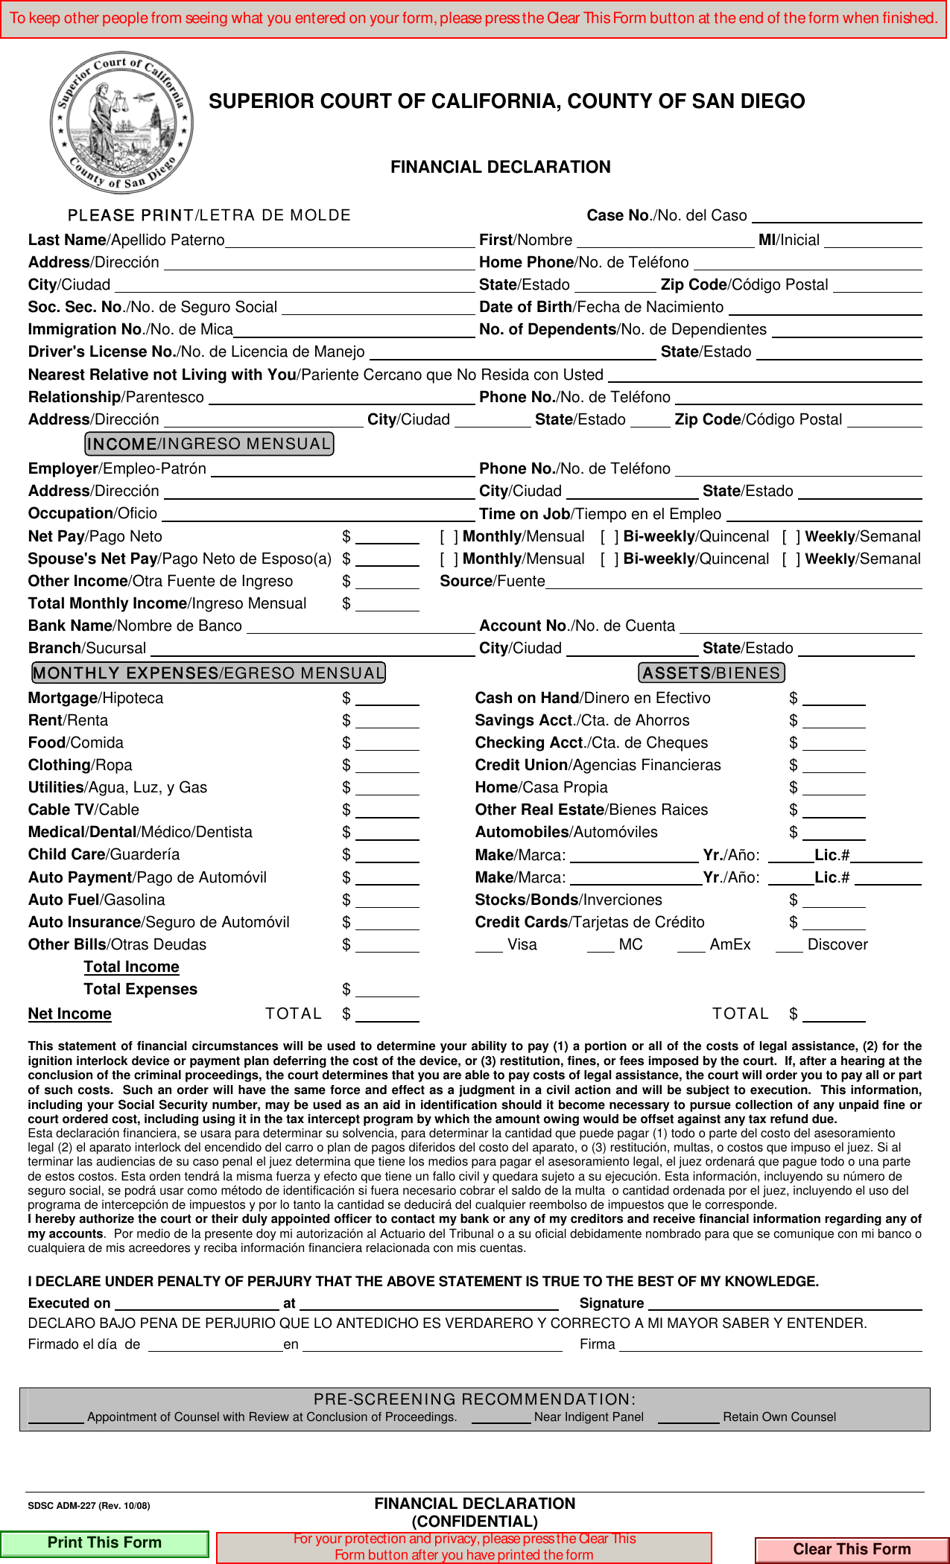 Form ADM-227 Financial Declaration - County of San Diego, California (English / Spanish), Page 1